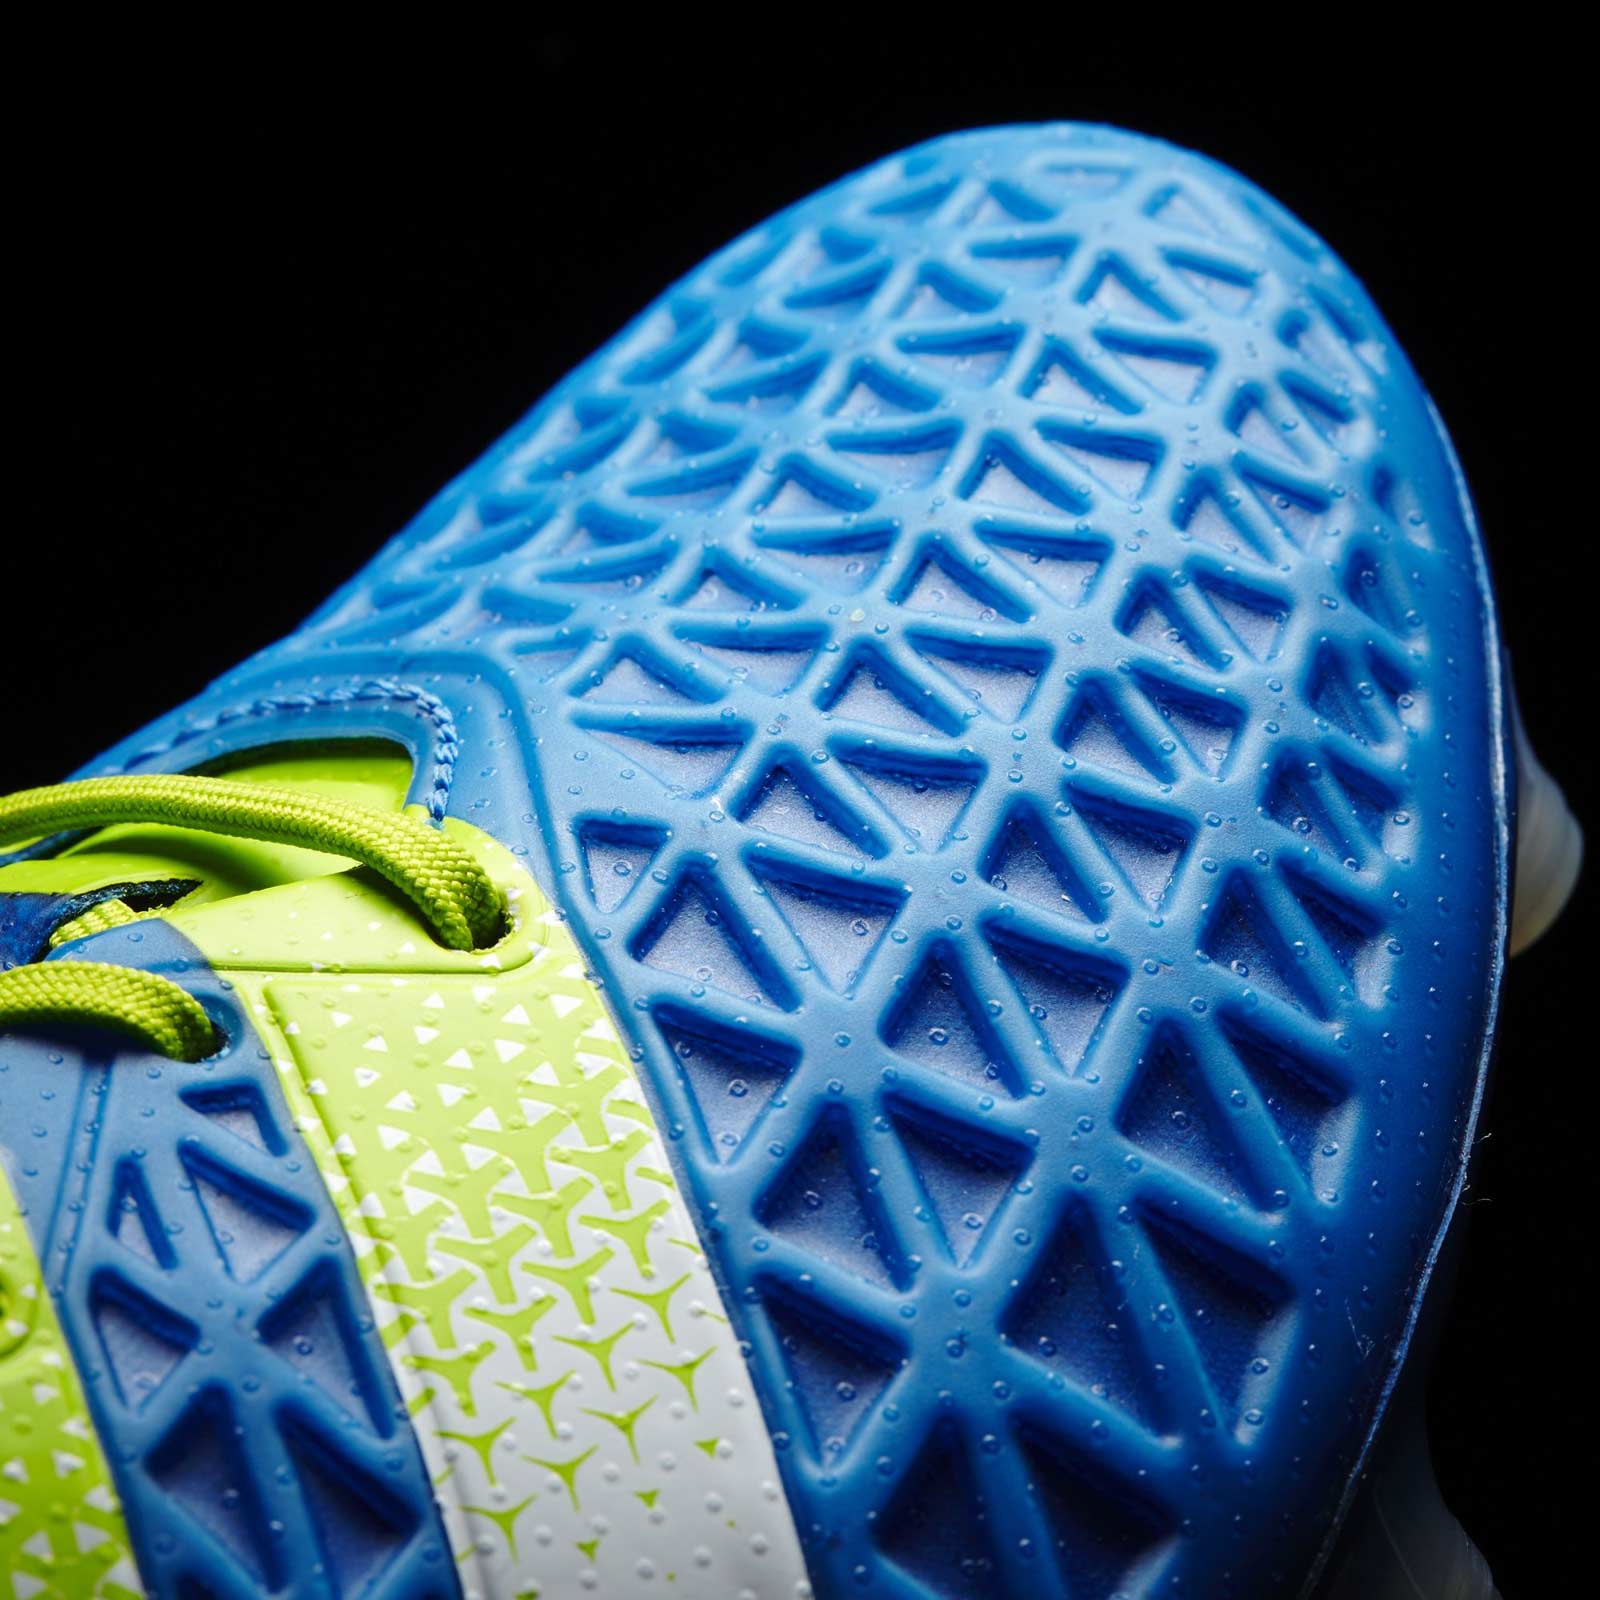 Shock Blue Next-Gen Adidas Ace 2016 Boots Leaked - Footy Headlines